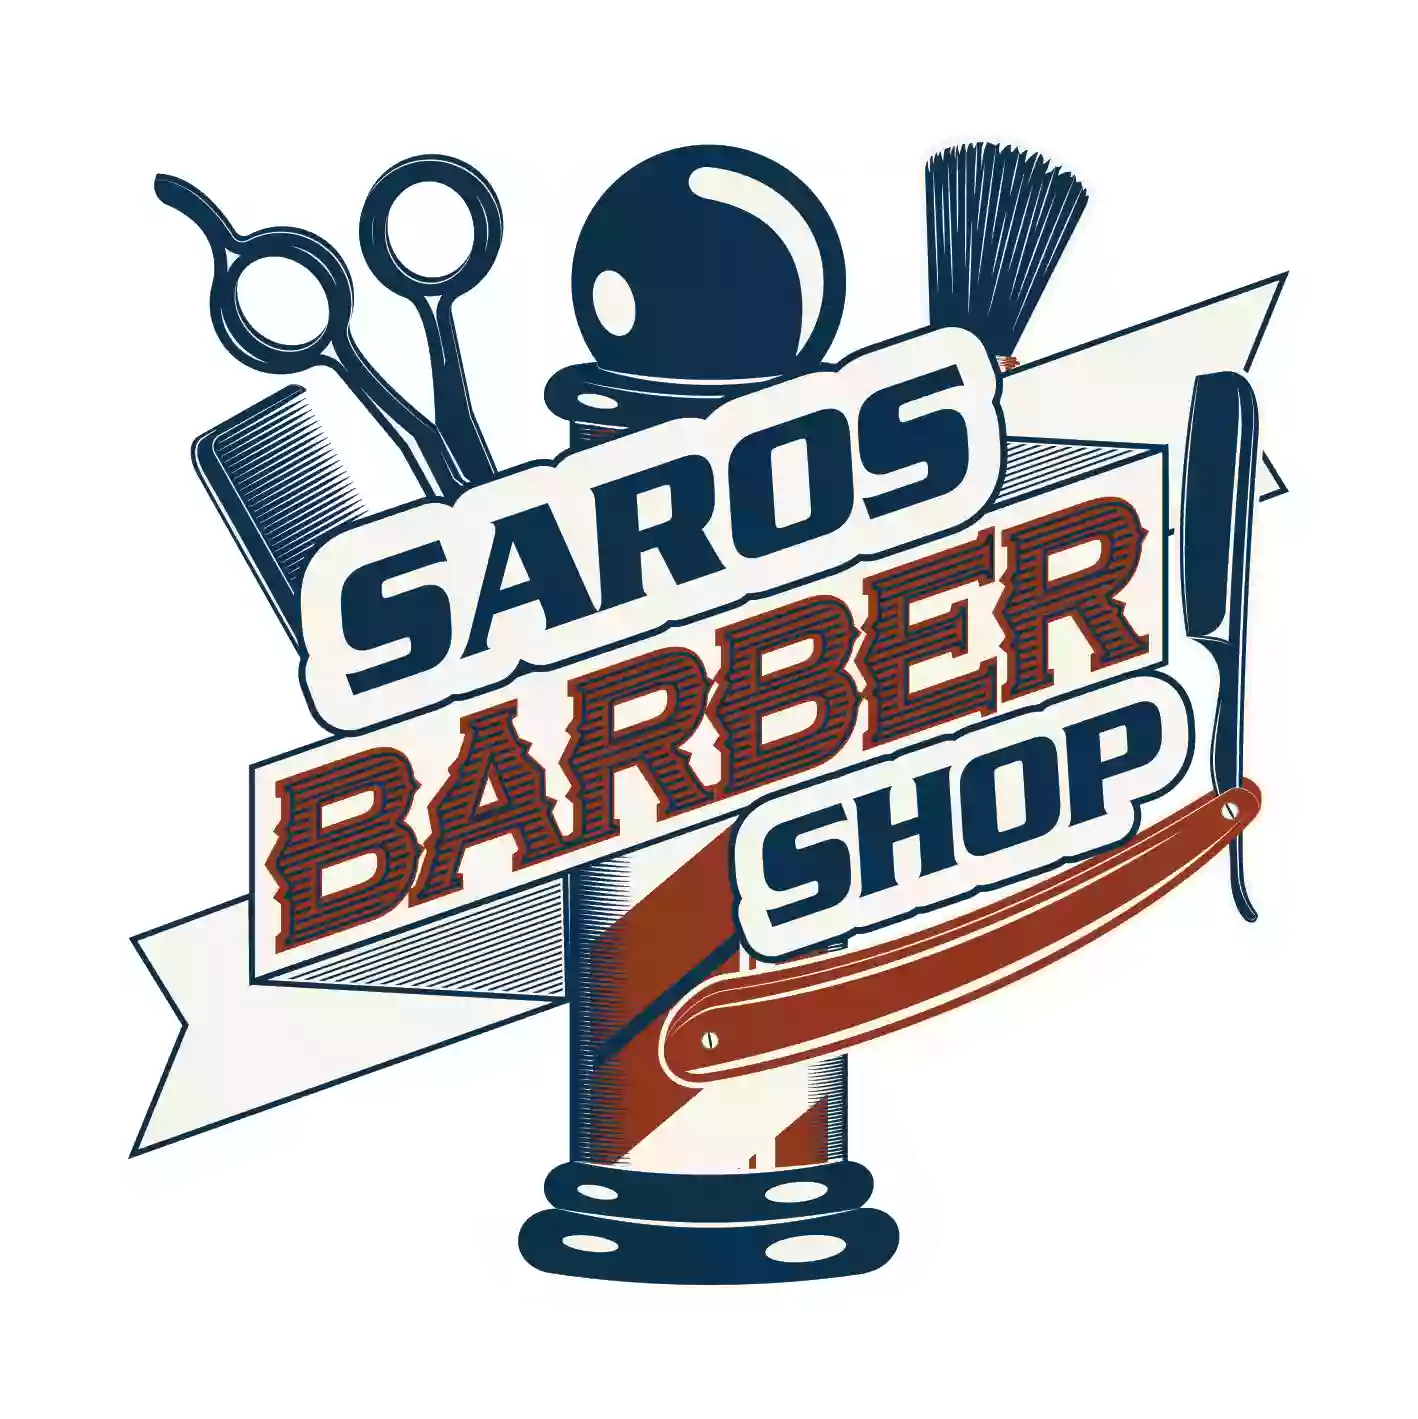 Saros Barbershop